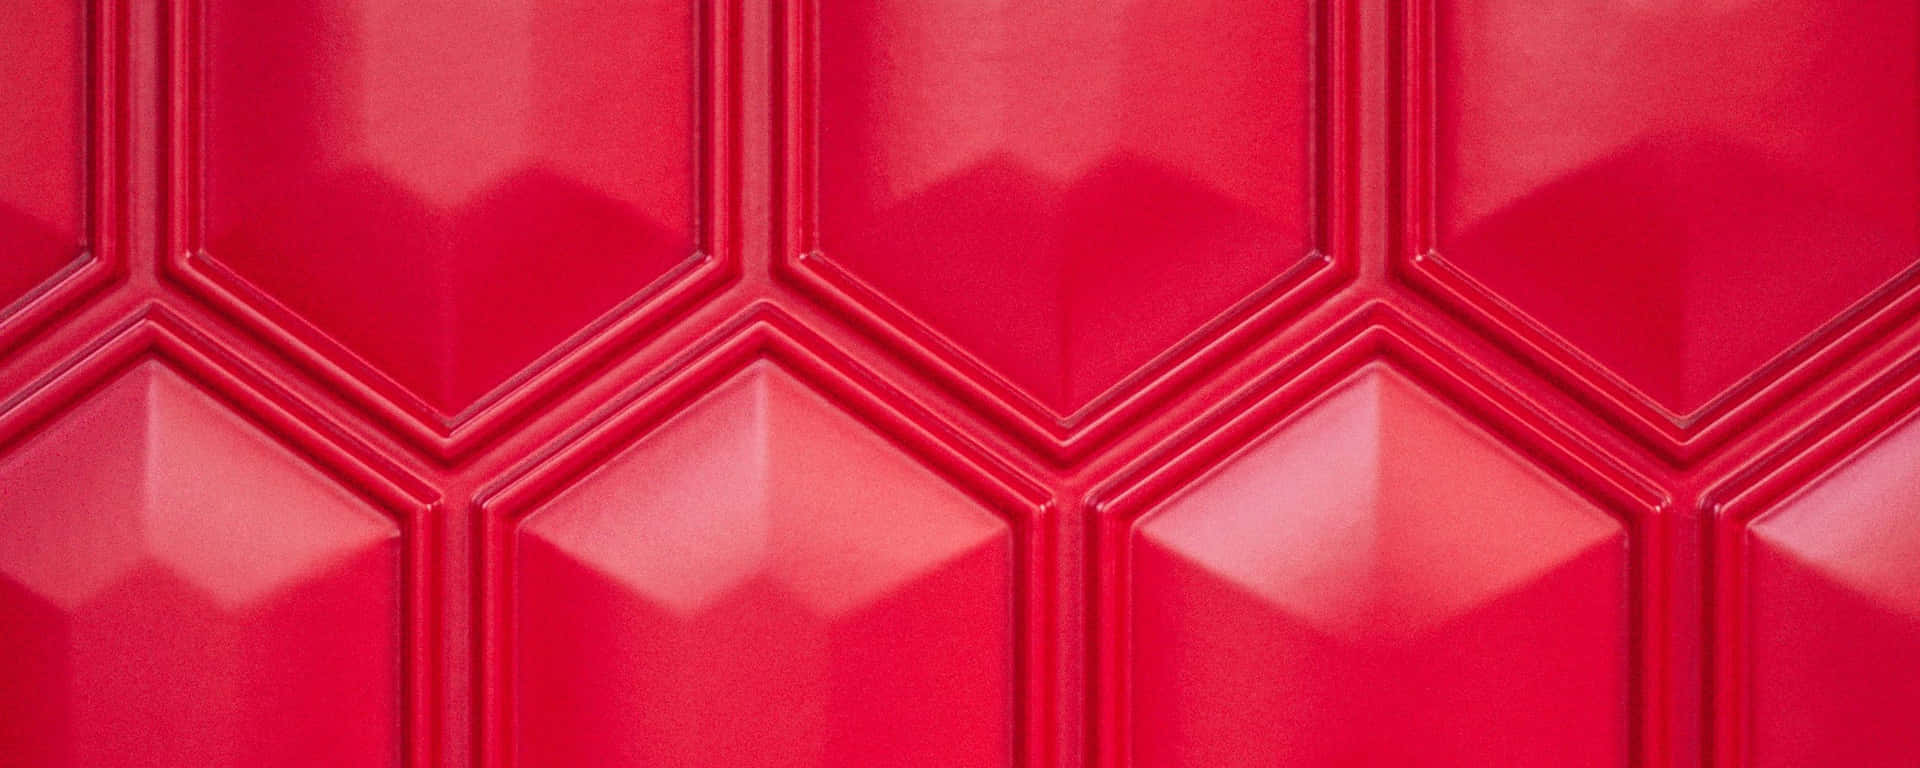 Hexagonmuster Rot, In Ultra Wide Hd Qualität. Wallpaper